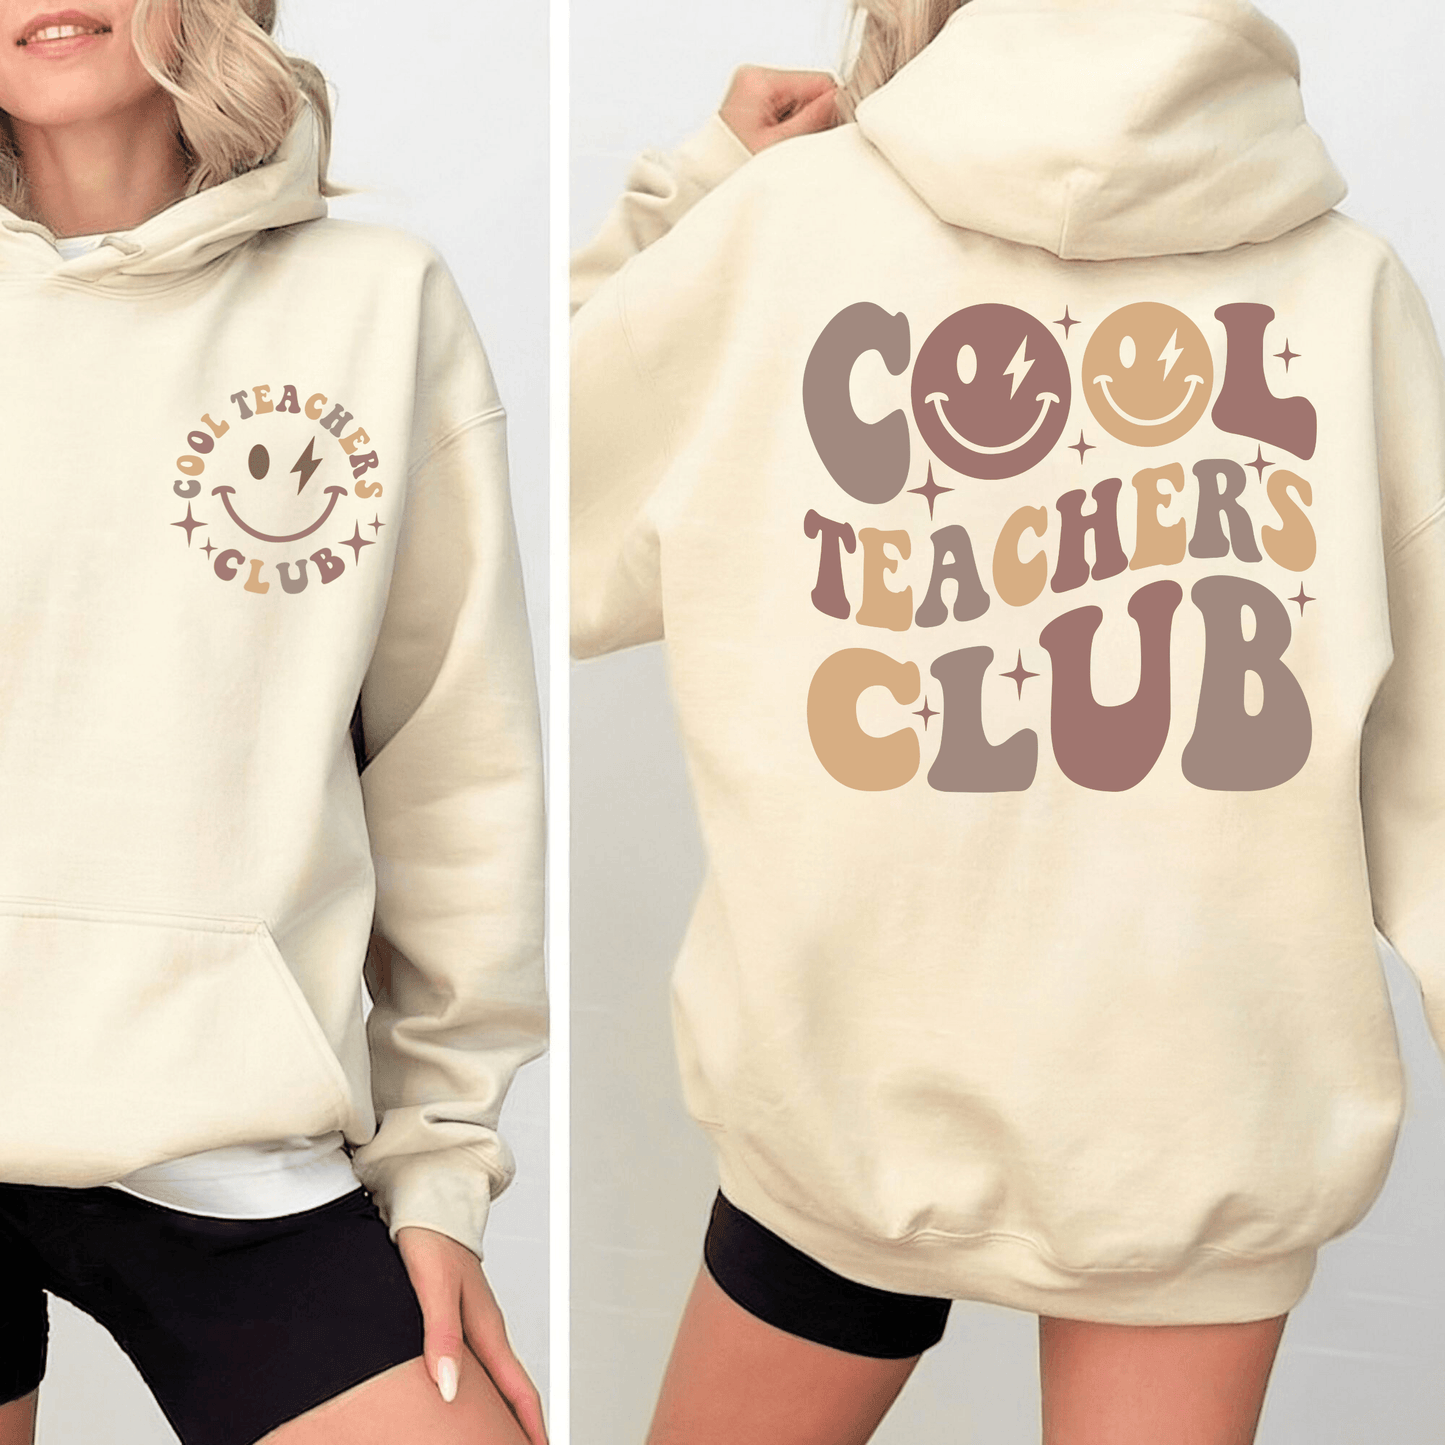 Ehre den Lehrberuf – Cool Teachers Club Inspiration - GiftHaus